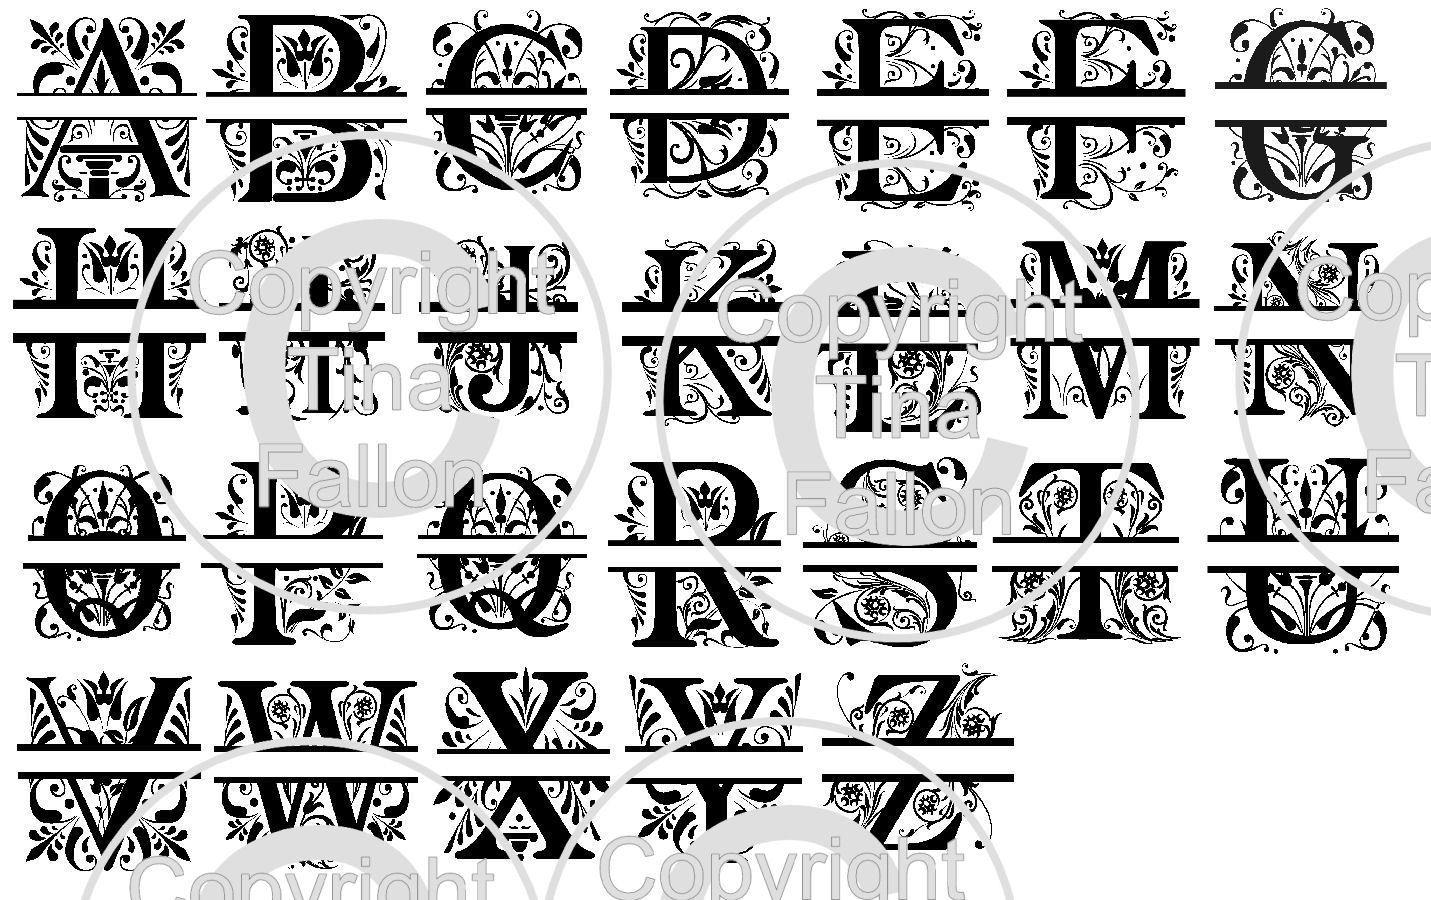 Split Letters - All 26 letters